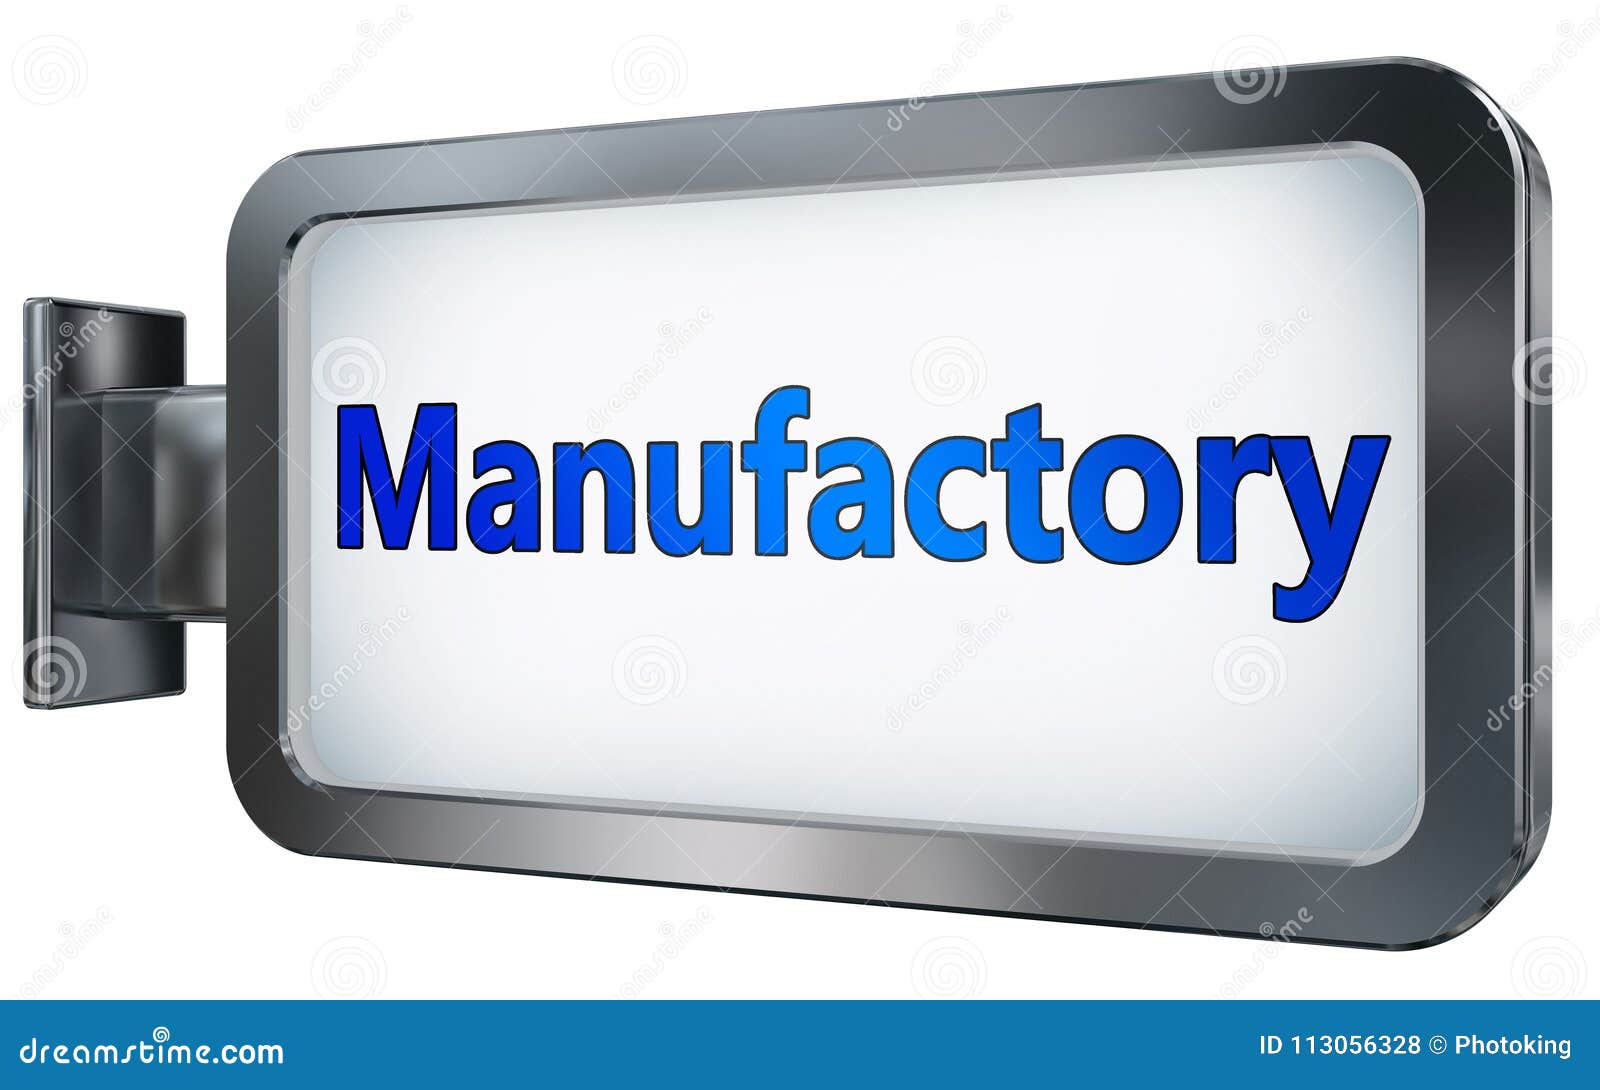 manufactory on billboard